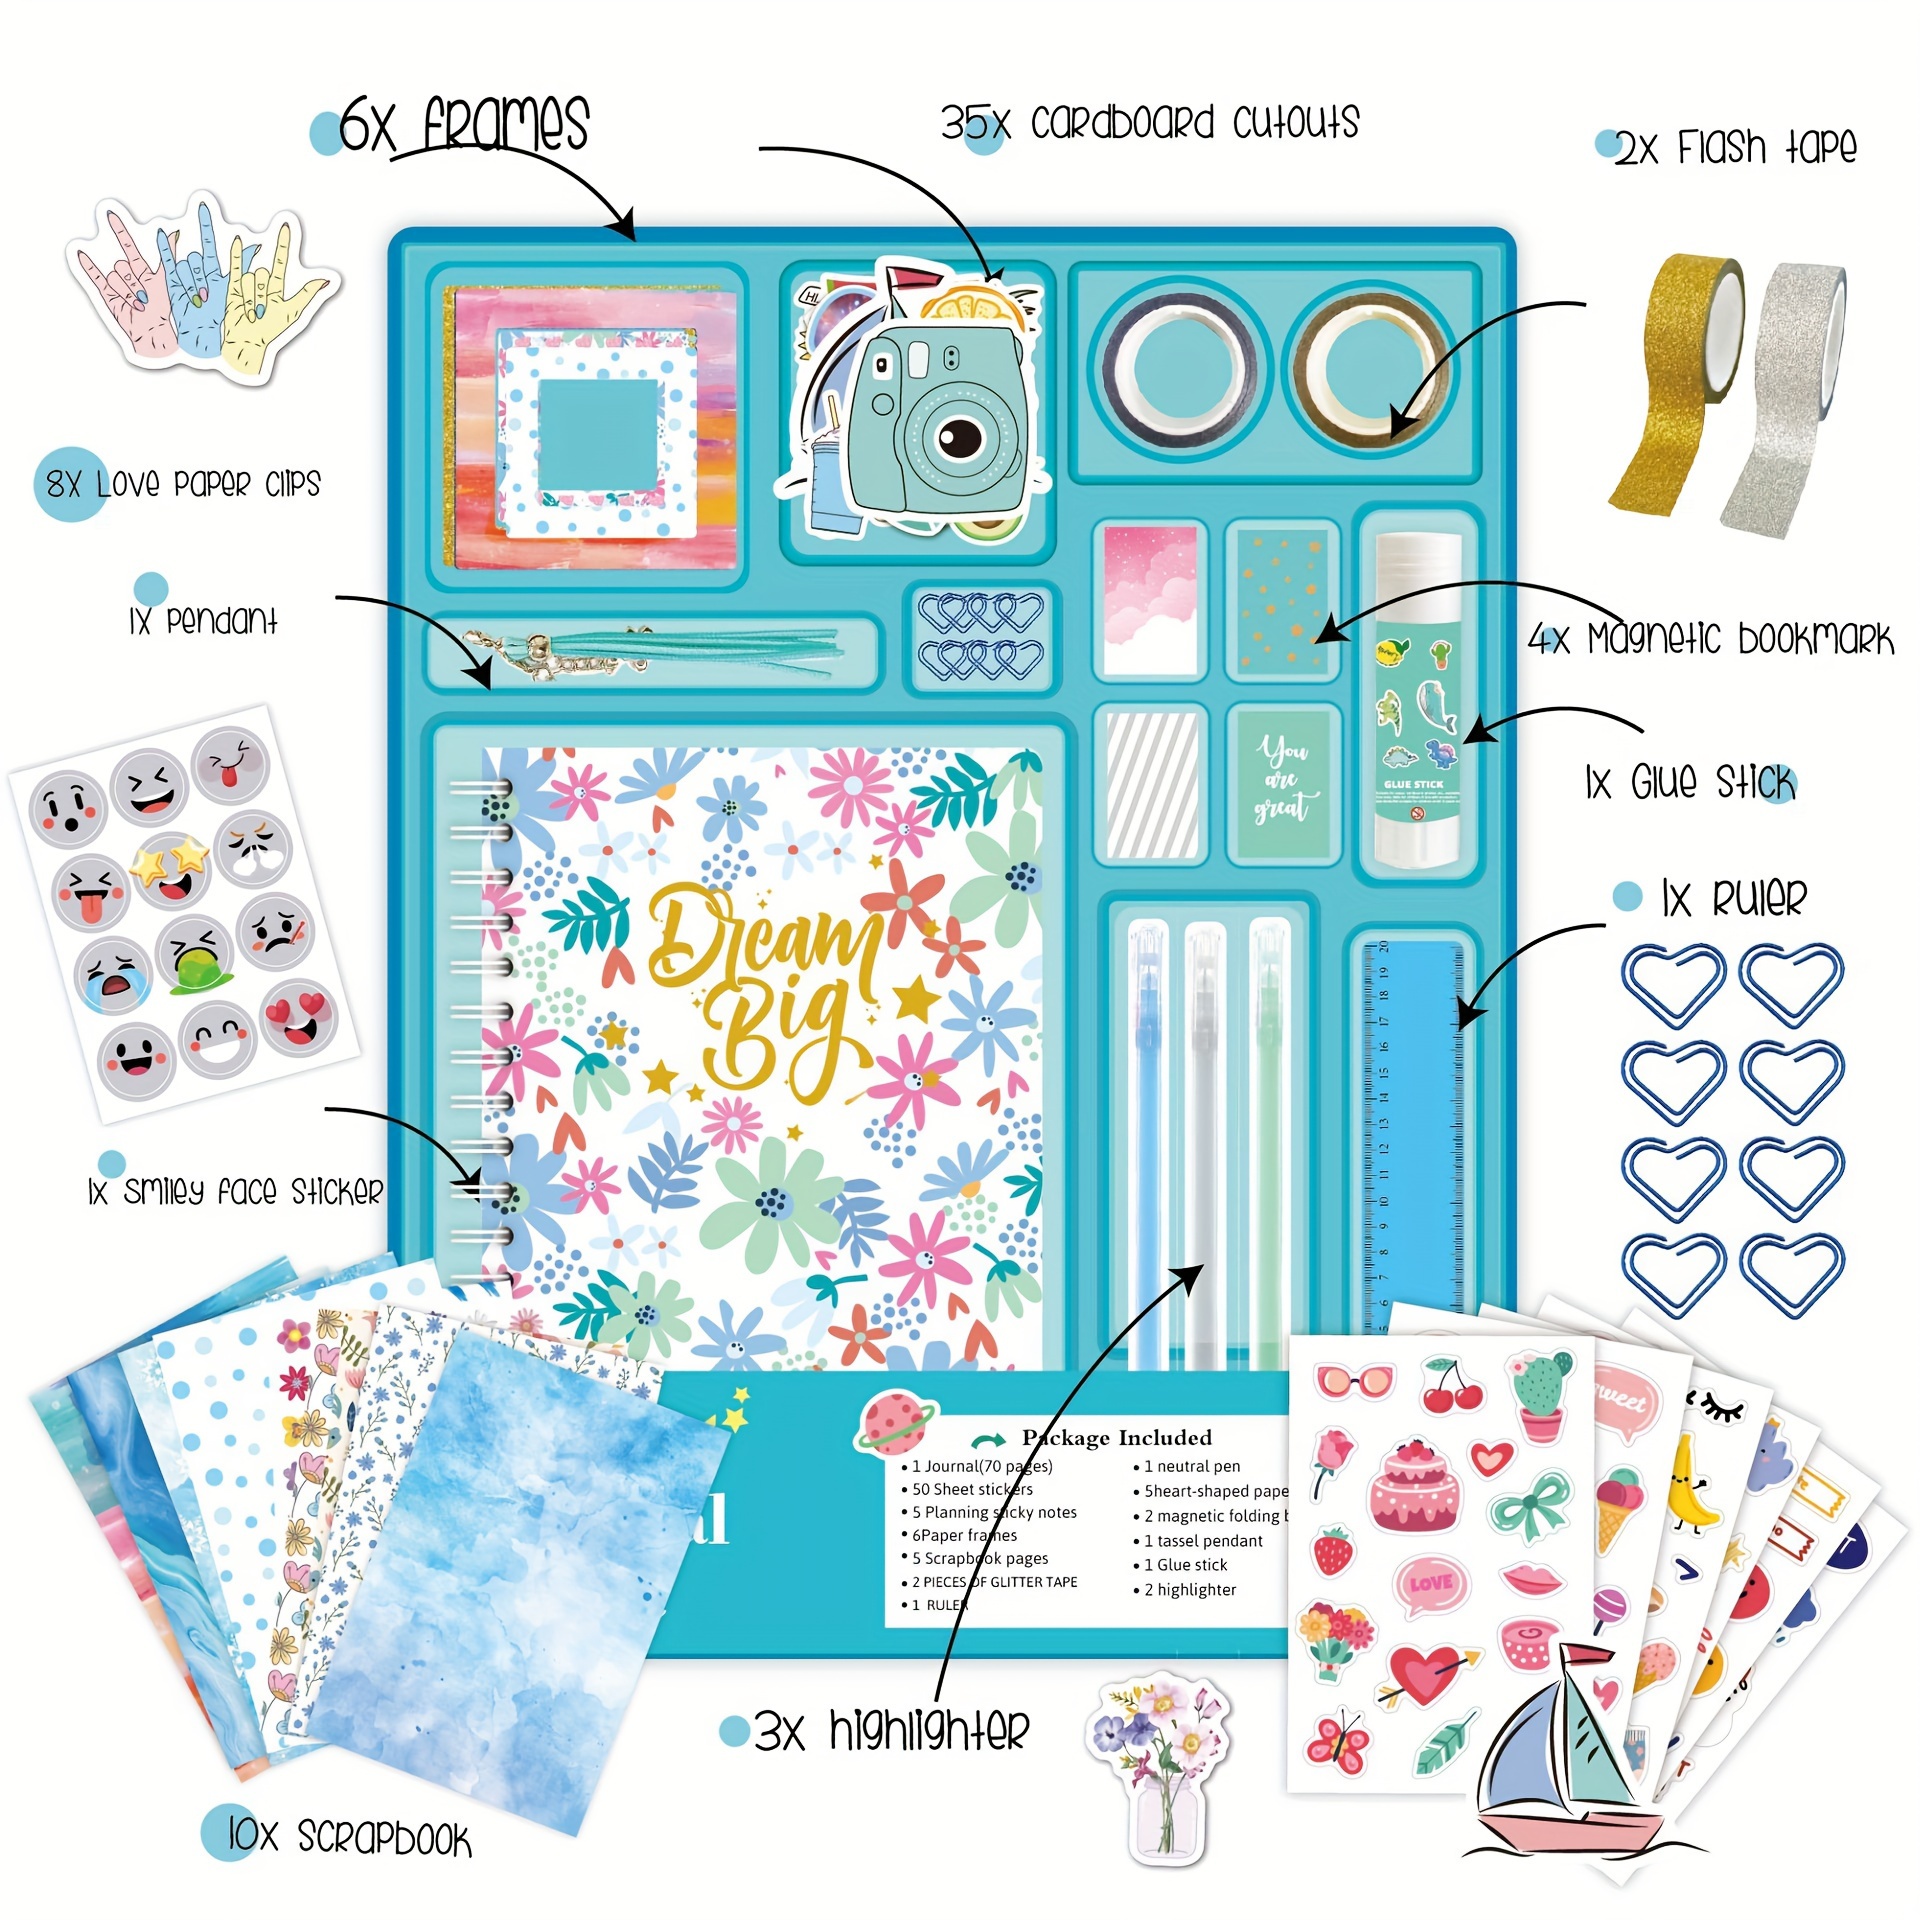 DIY Journal Set, Creative Writing Journal Scrapbook Kit for Teens